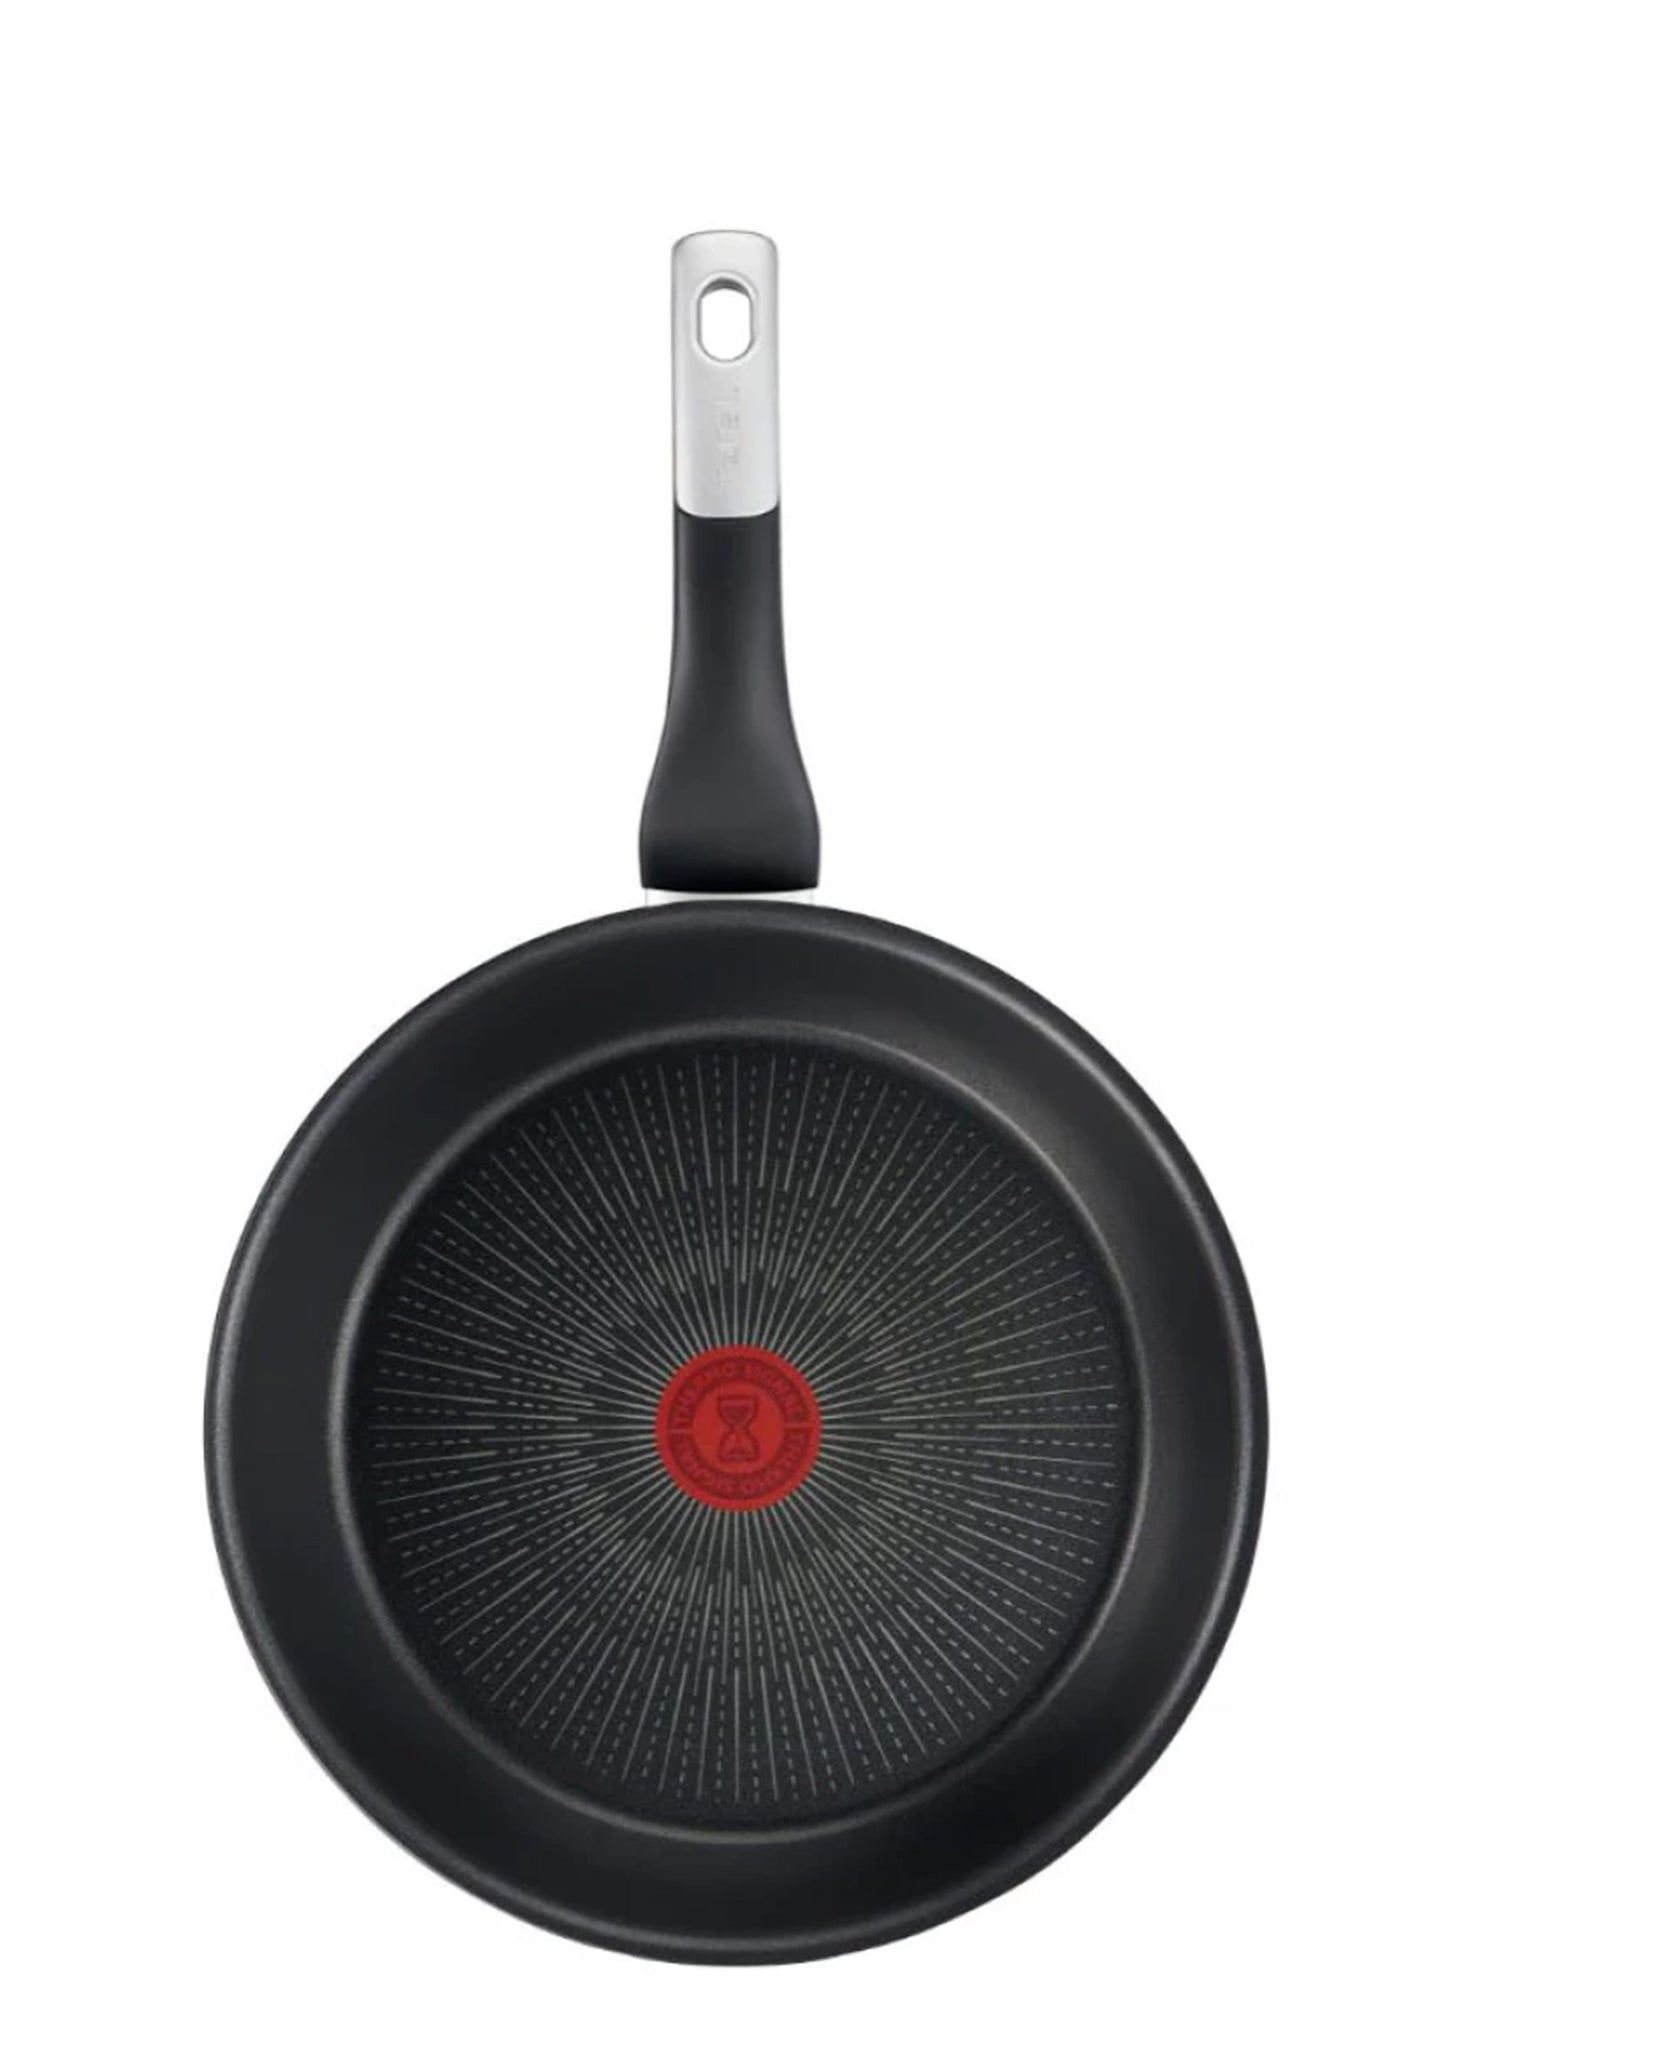 Tefal Unlimited Frying Pan 24cm - Black